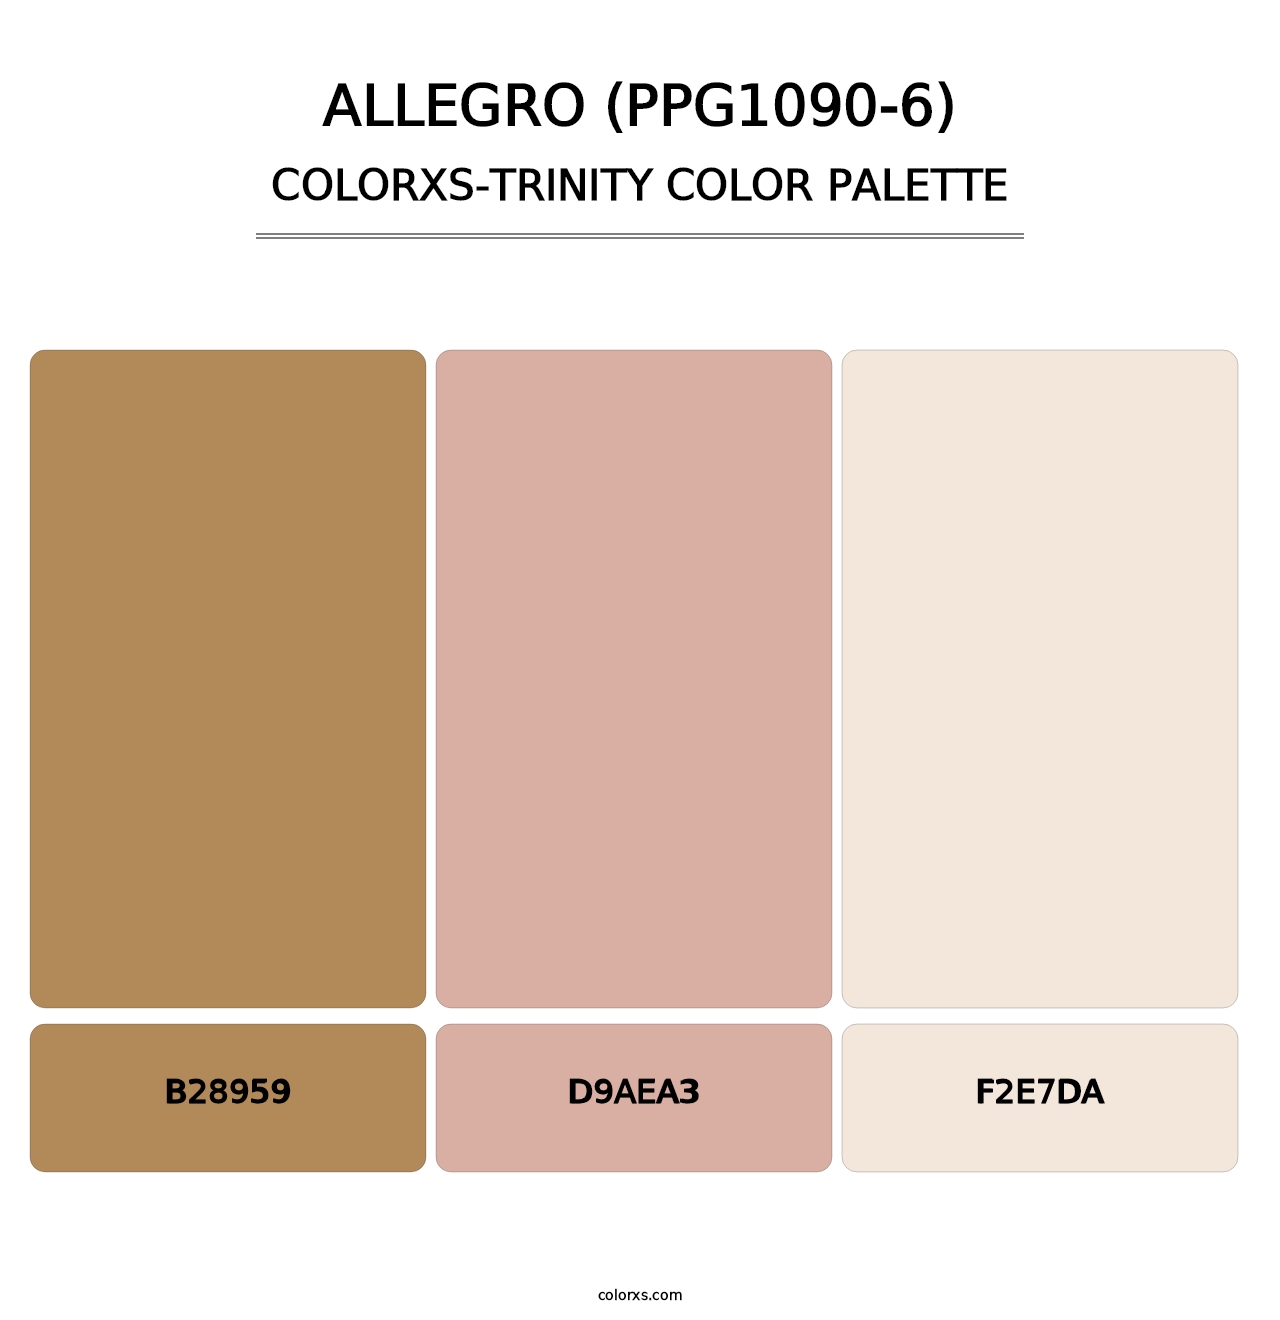 Allegro (PPG1090-6) - Colorxs Trinity Palette